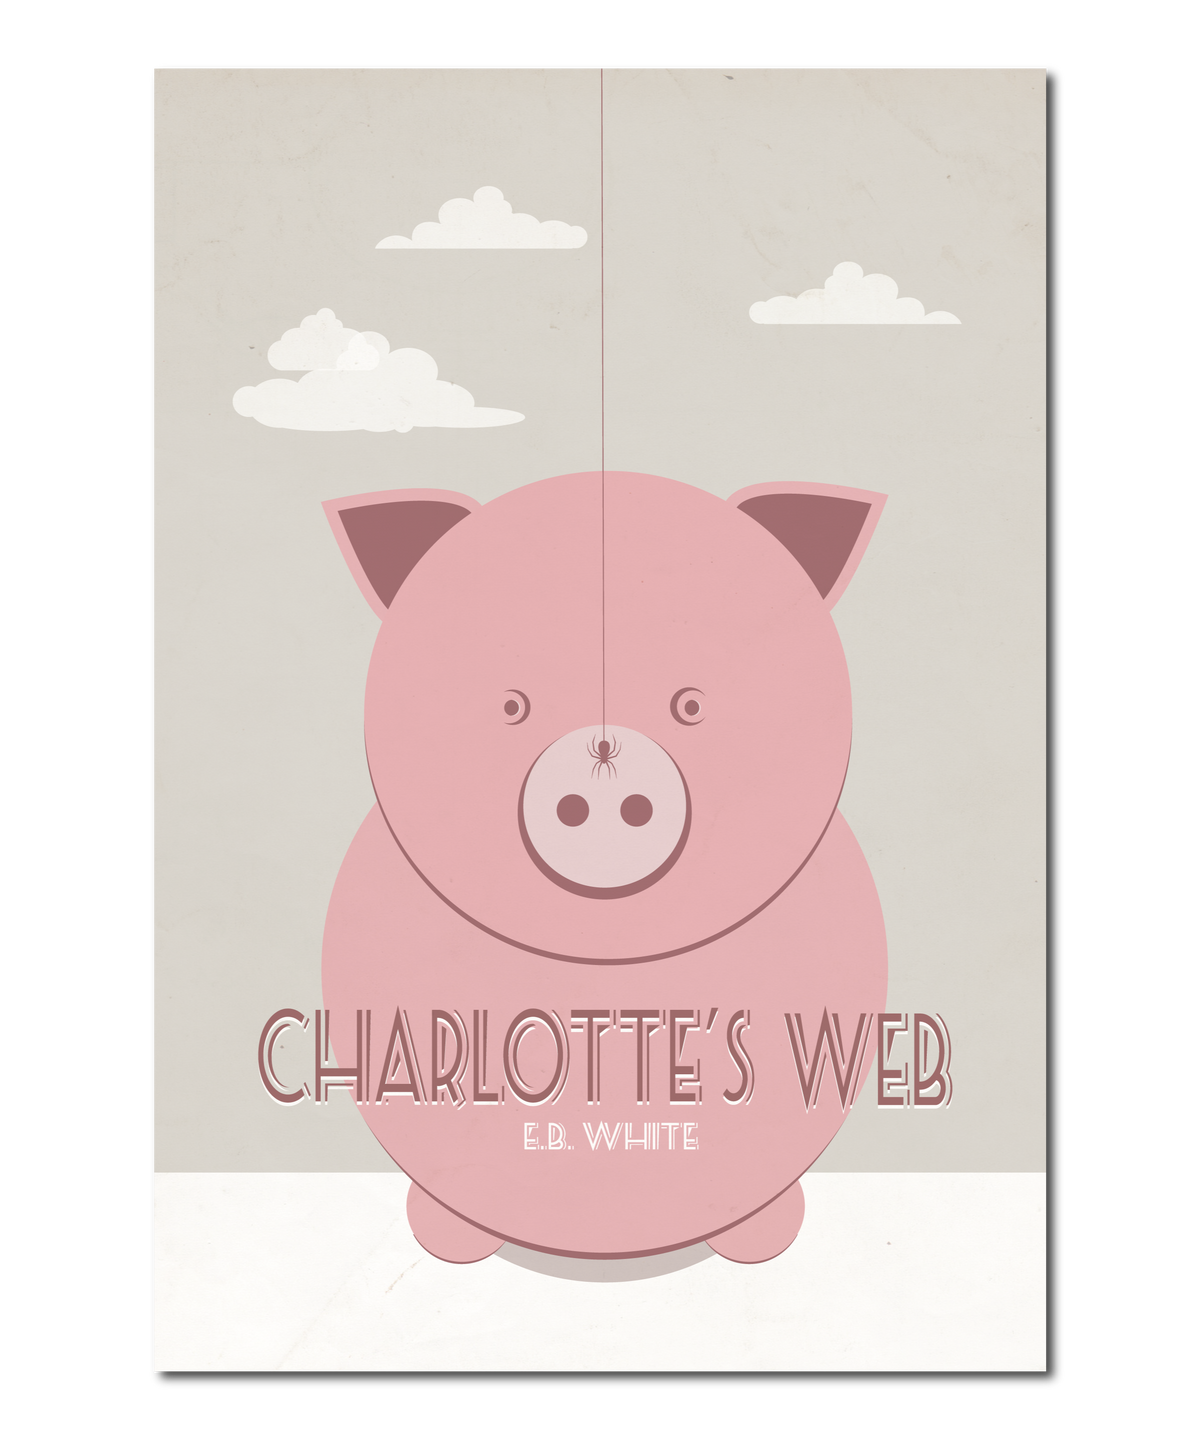 Original Print Reinterpretation of the classic novel, "Charlotte's Web”